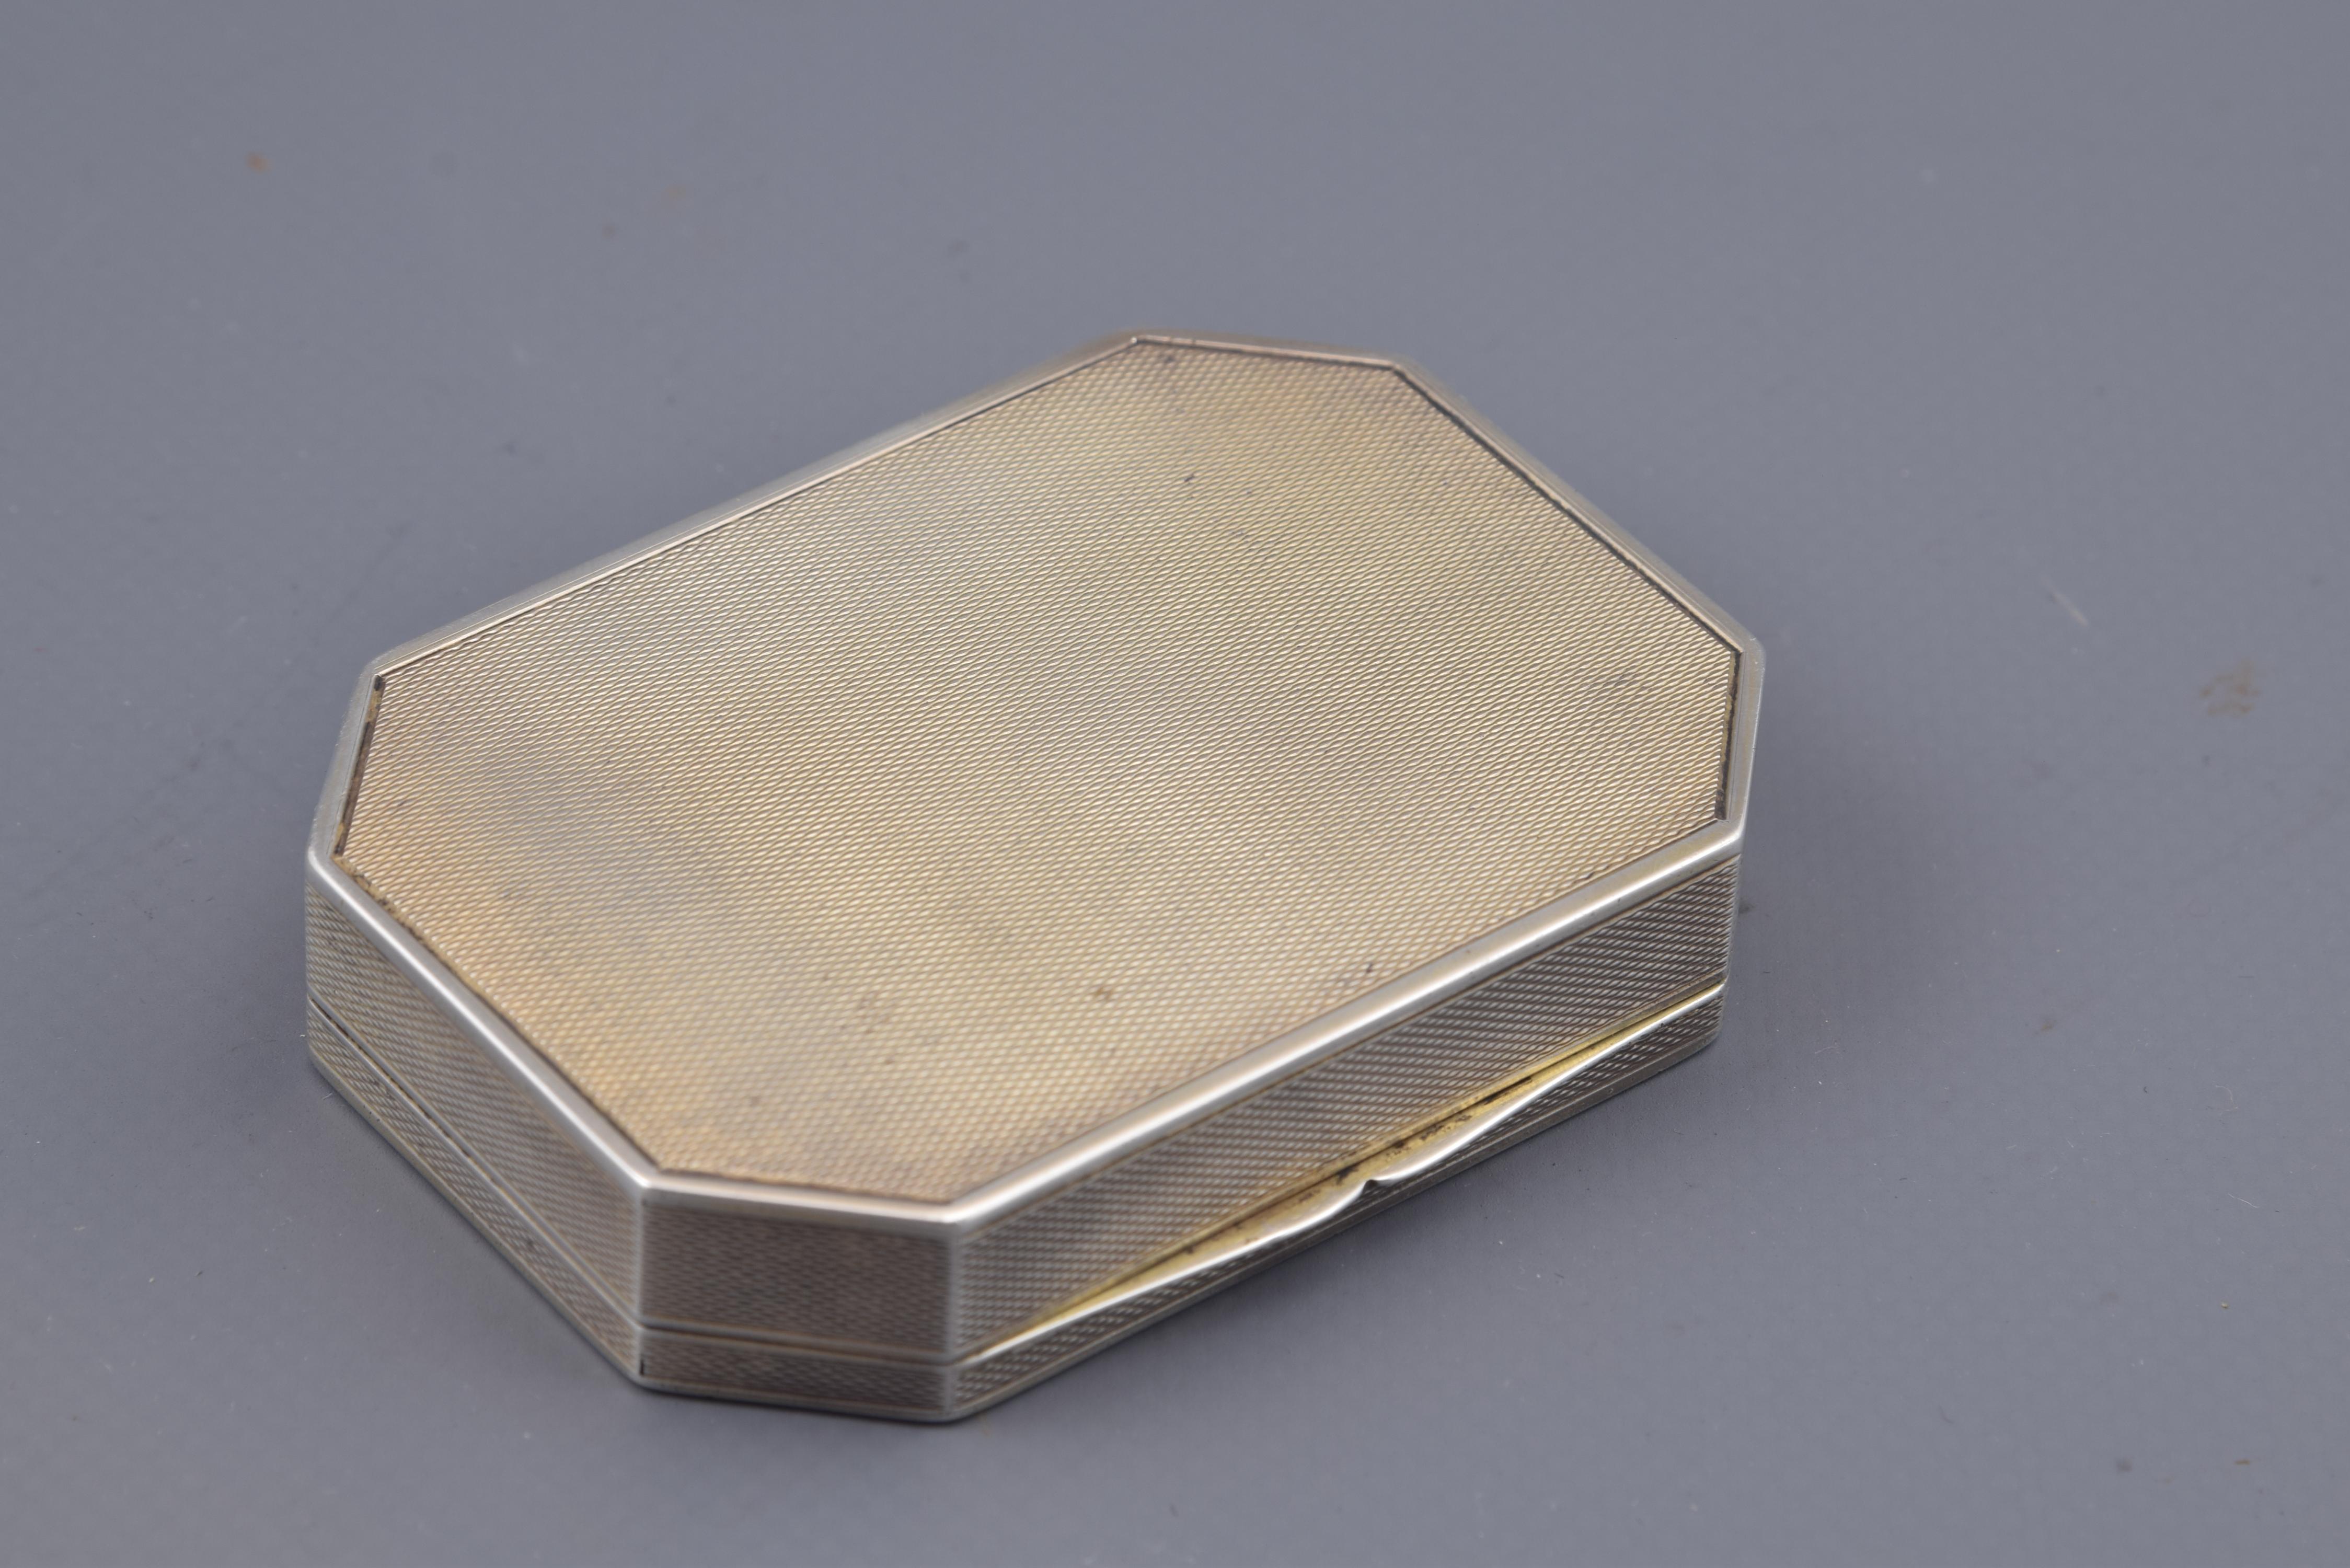 European Silver and Enamel Box, Late 19th Century-20th Century